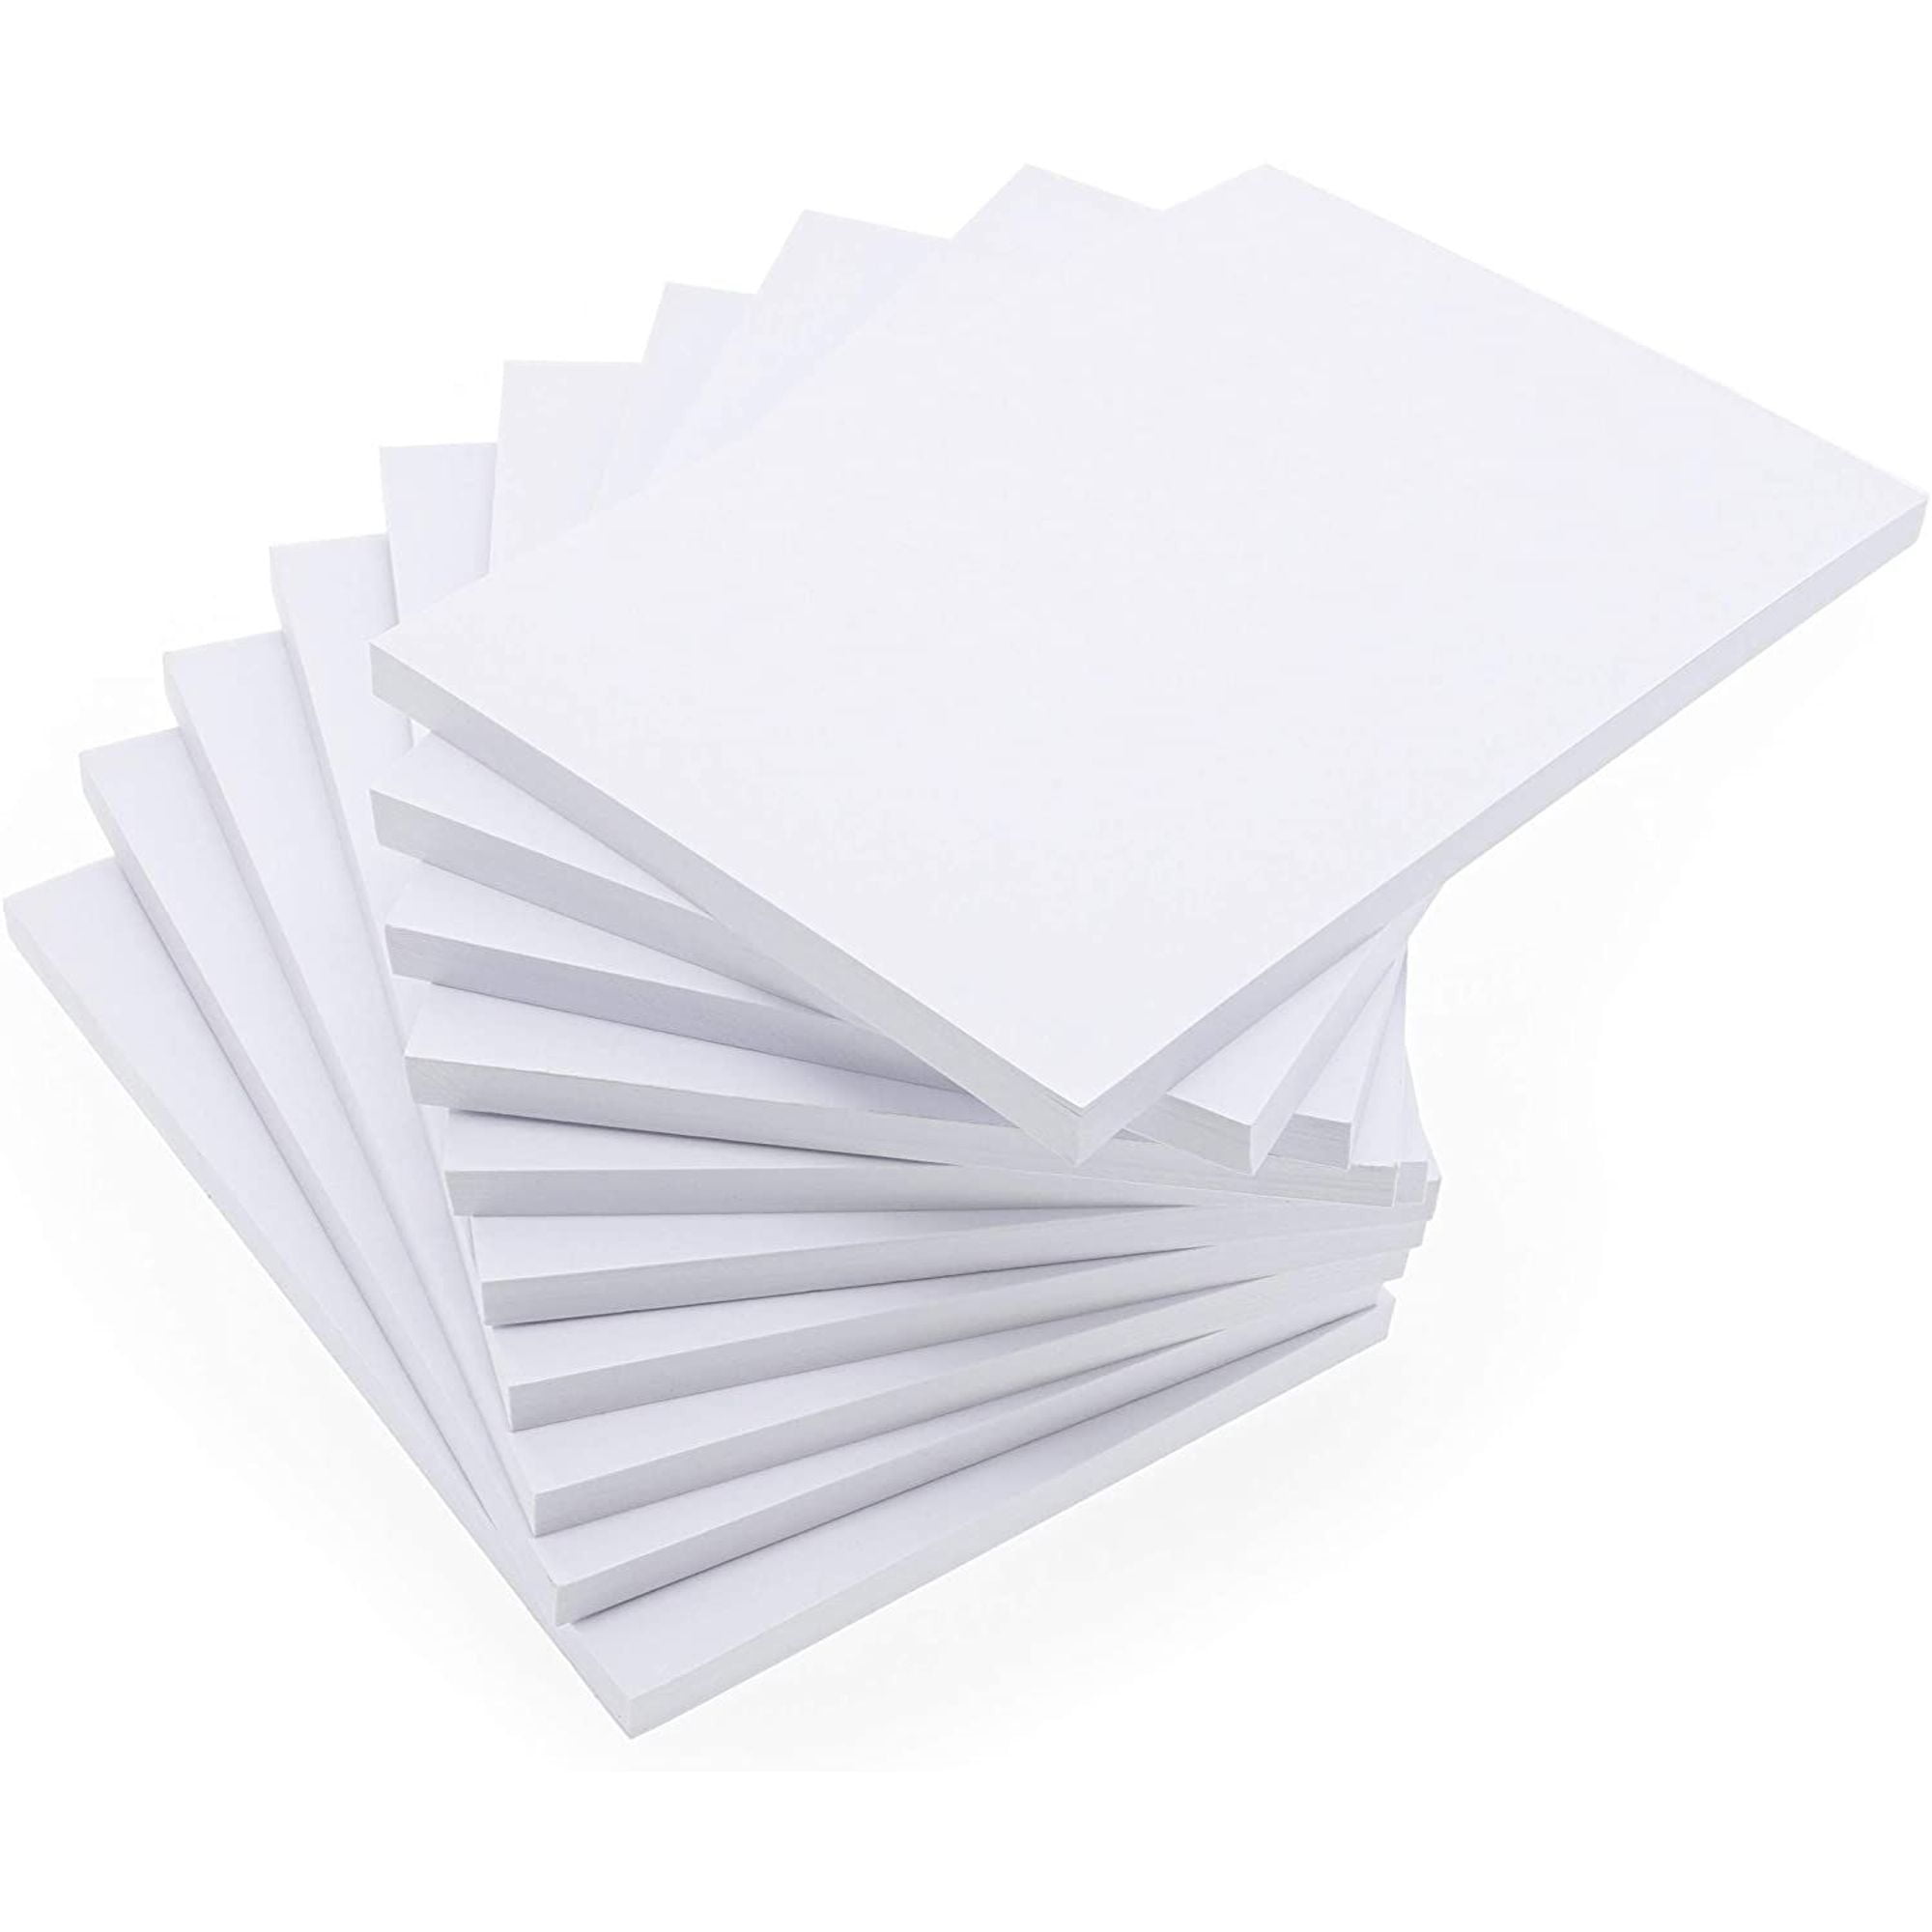 10 Pack Blank Notepads Plain Memo Paper Pad 4x6 Inches Value Pack Walmart Com Walmart Com